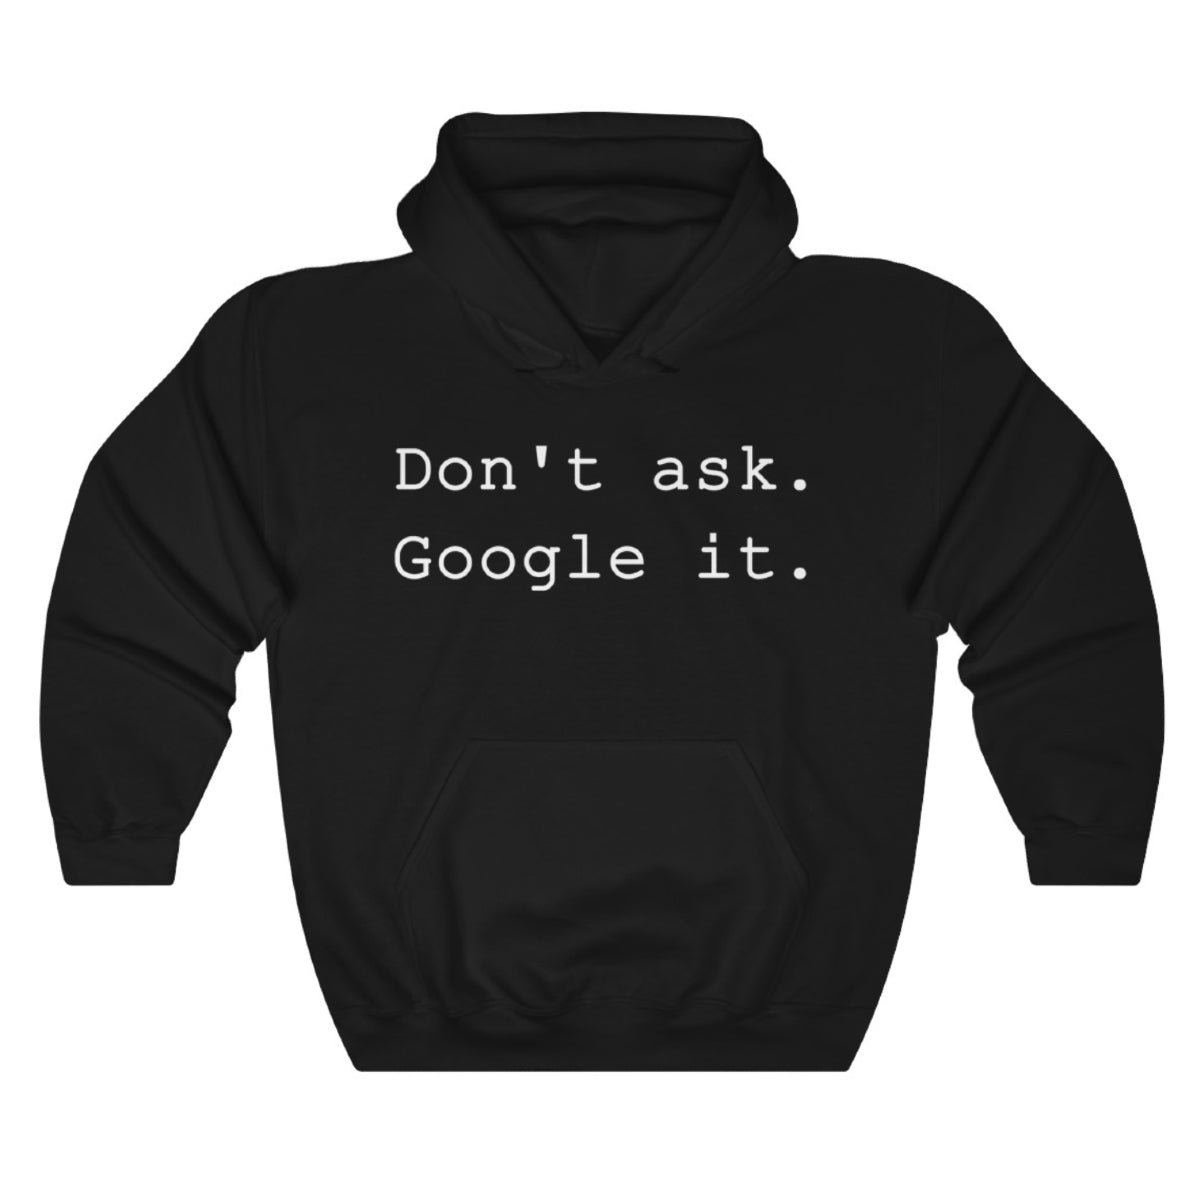 Don't Ask. Google it. Hoodies